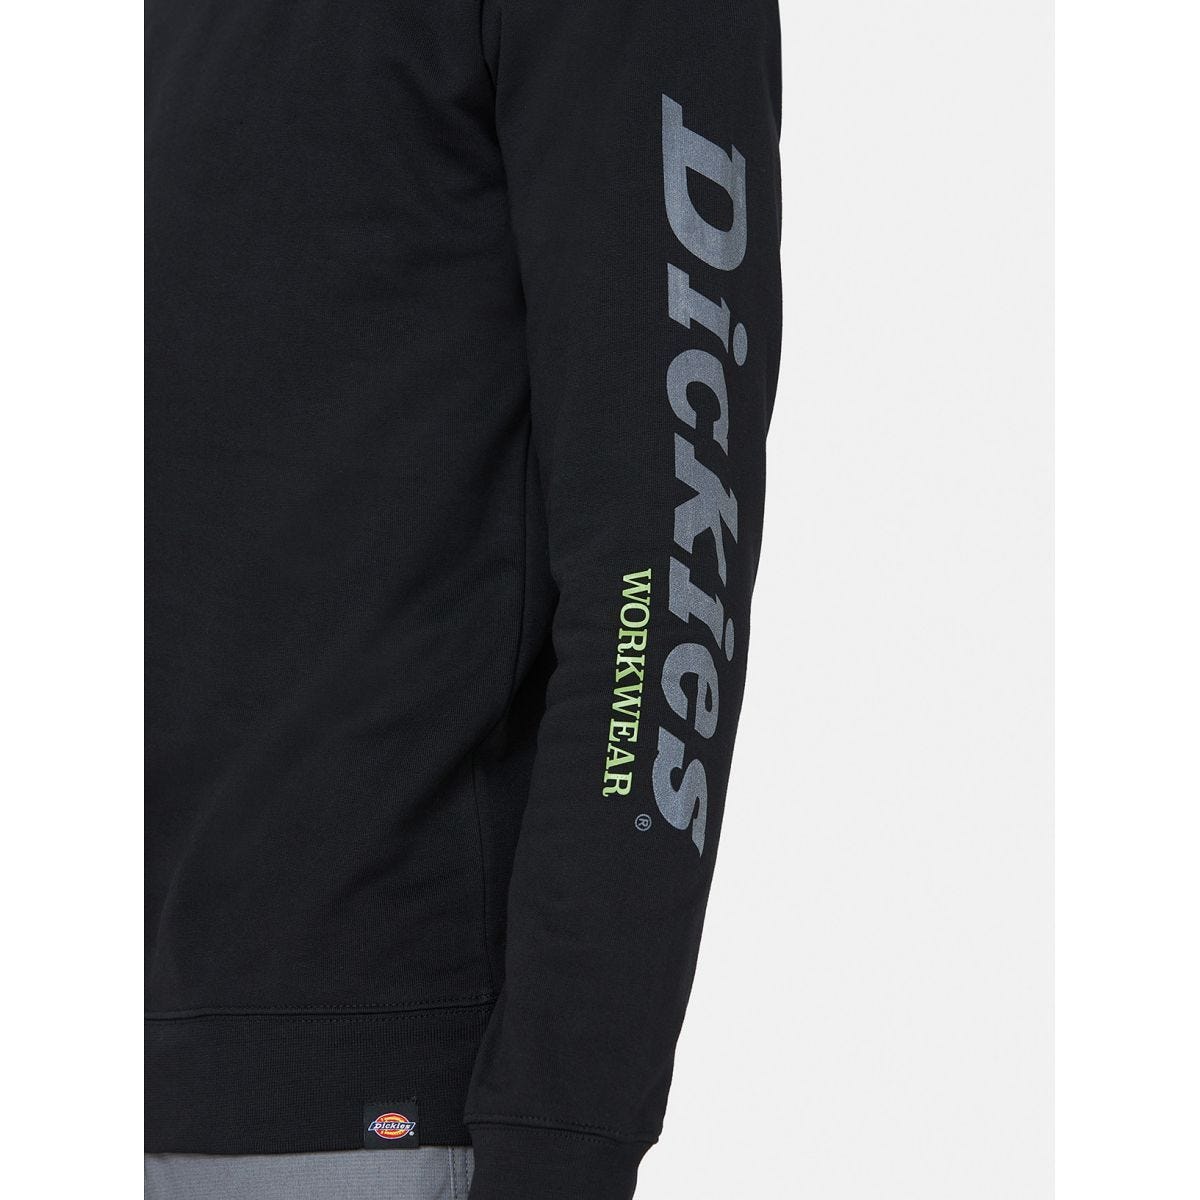 Sweat-shirt imprimé Okemo Noir - Dickies - Taille L 4